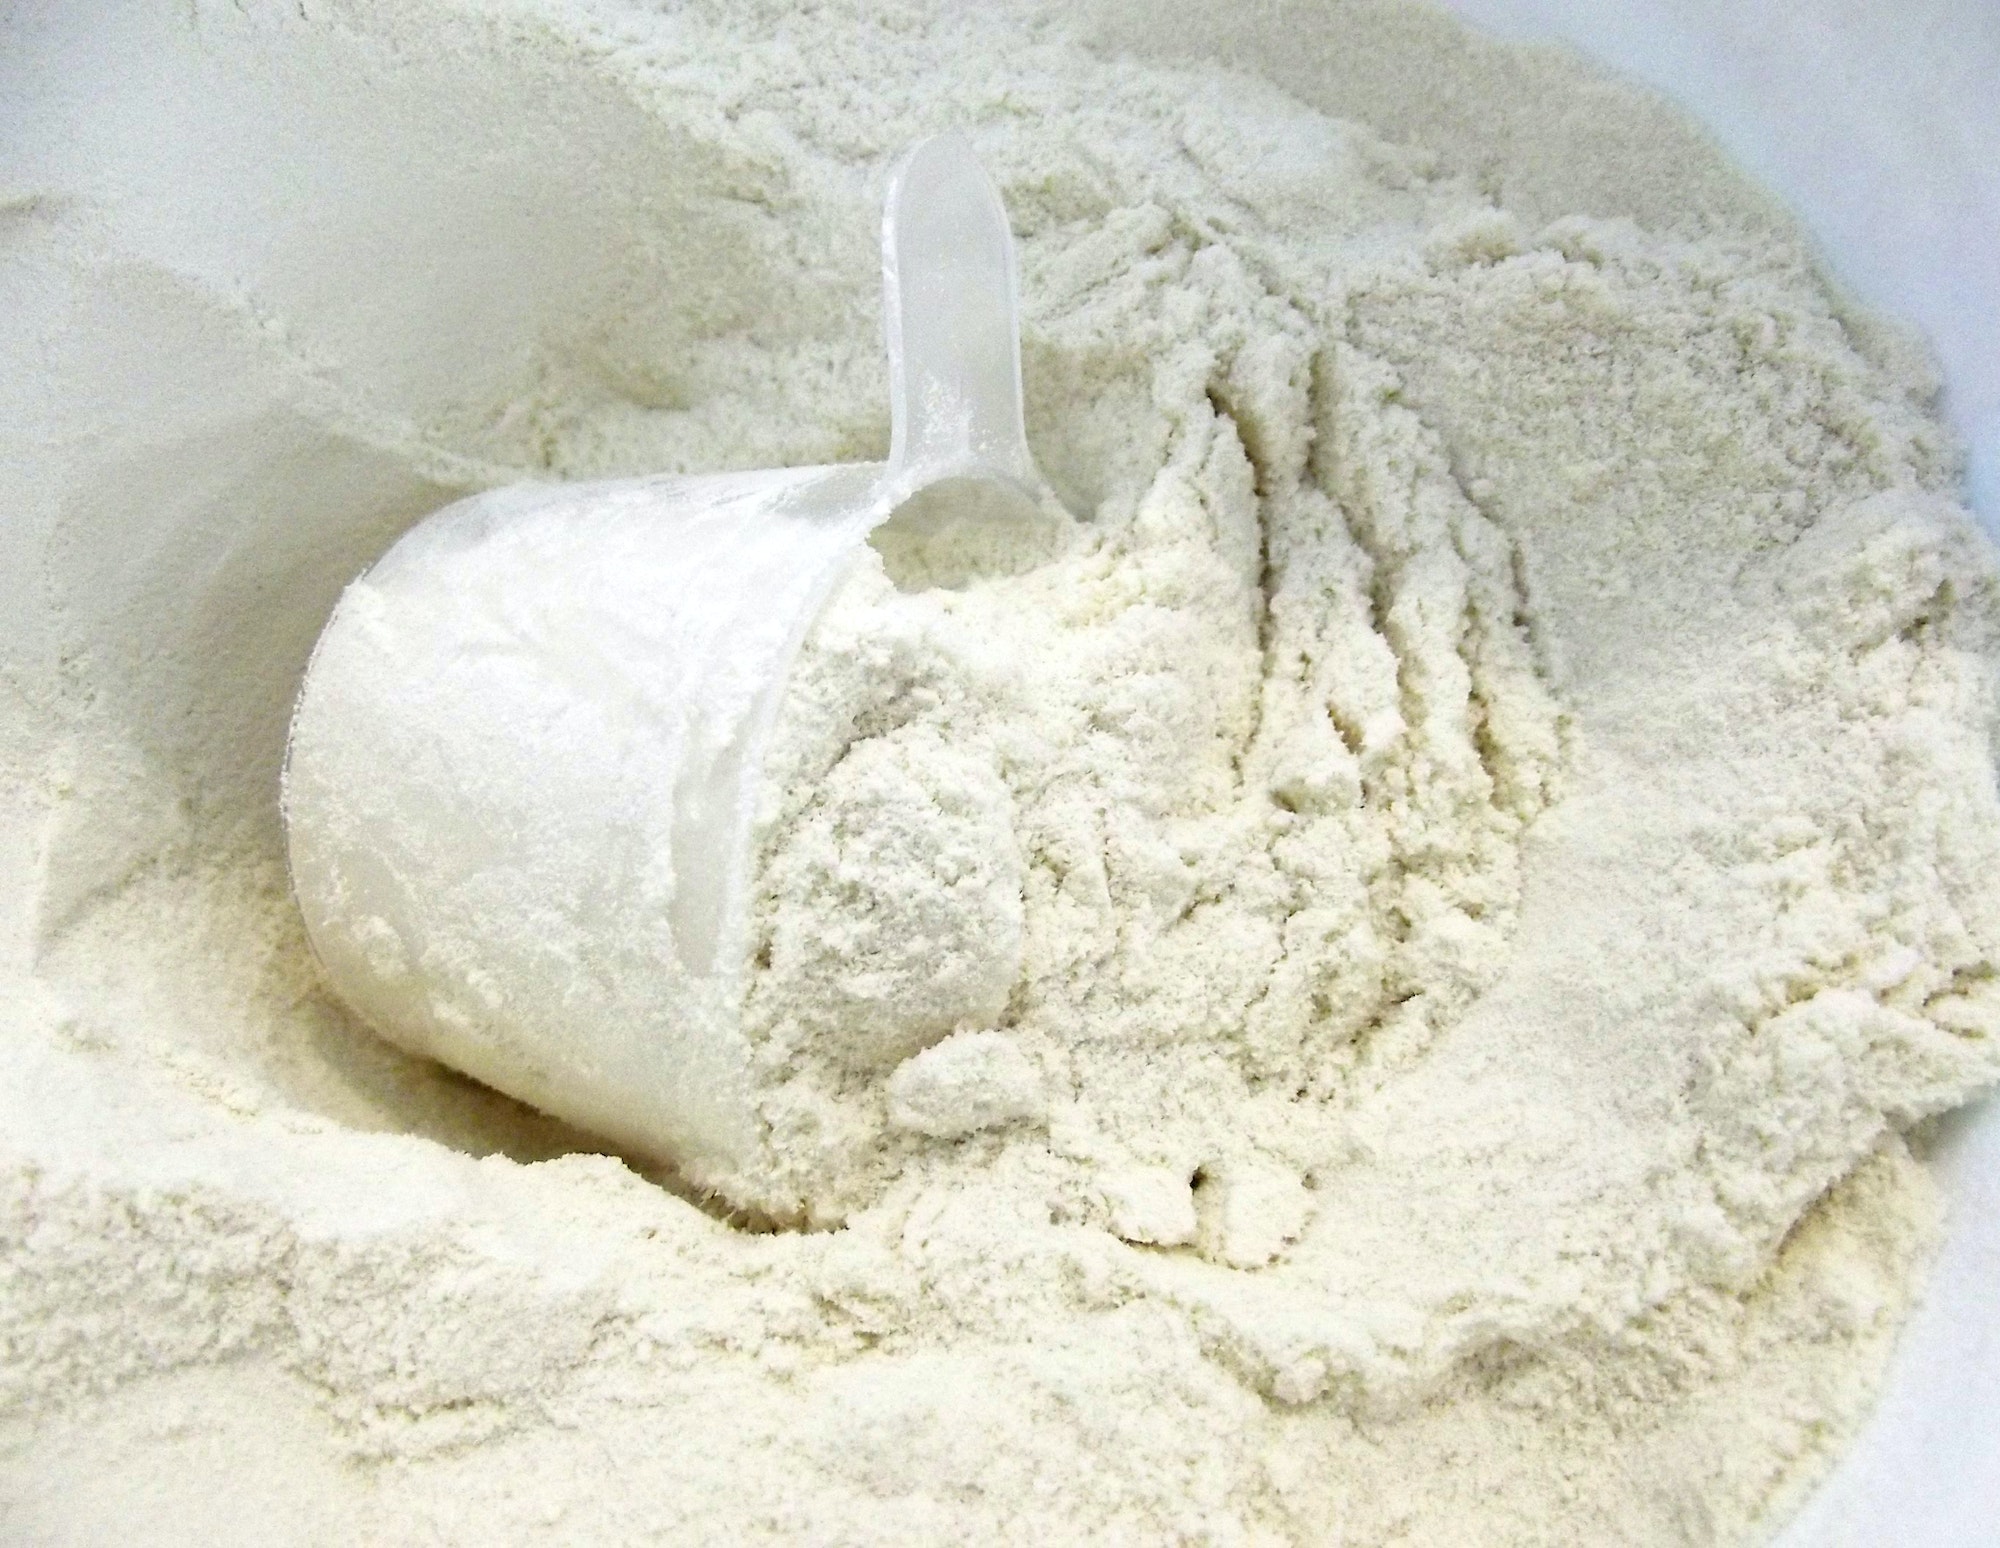 Scoop of whey protein powder